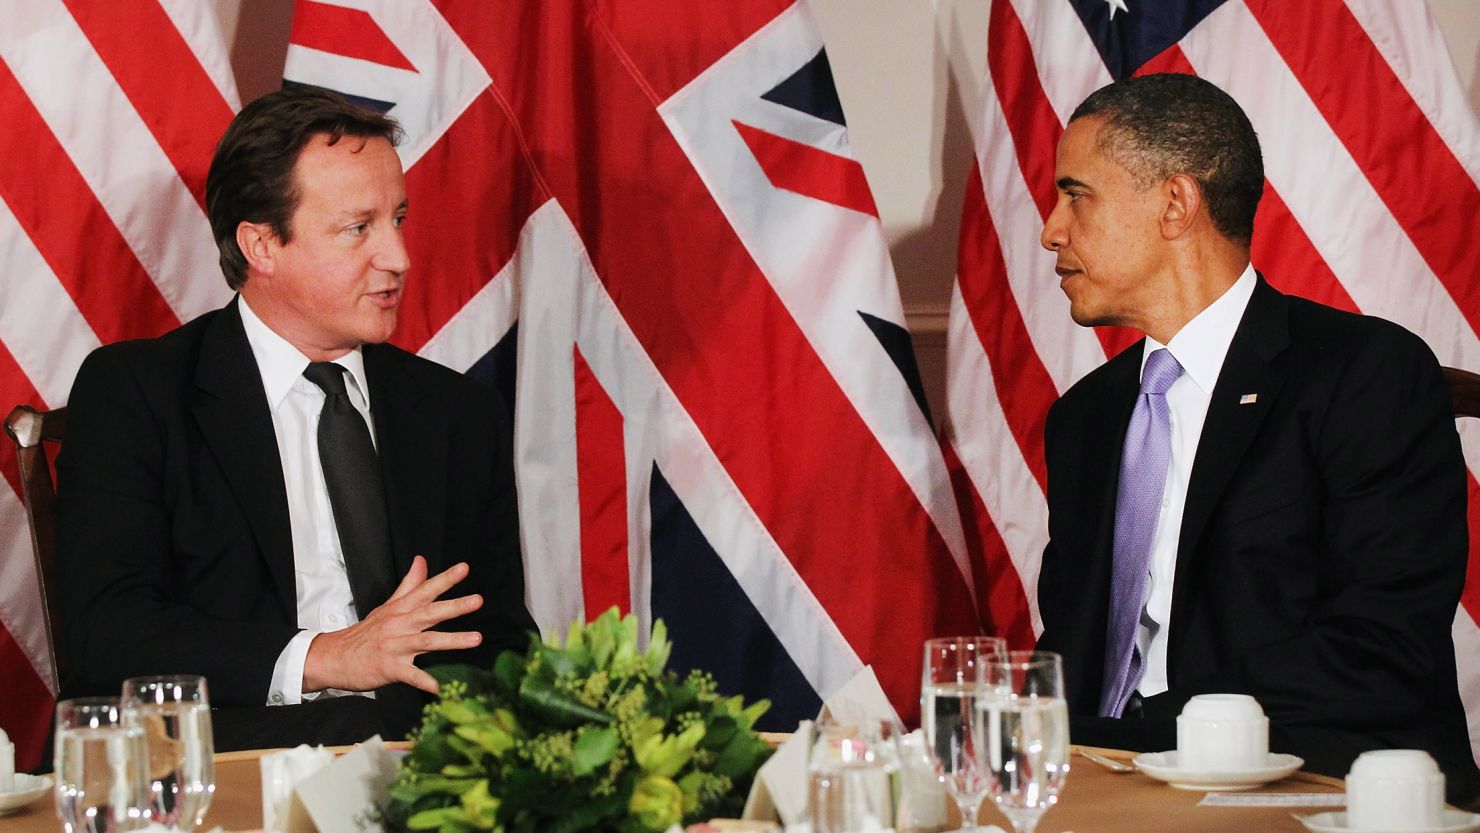 British Prime Minister David Cameron and U.S. President Barack Obama meet in New York in September 2011.